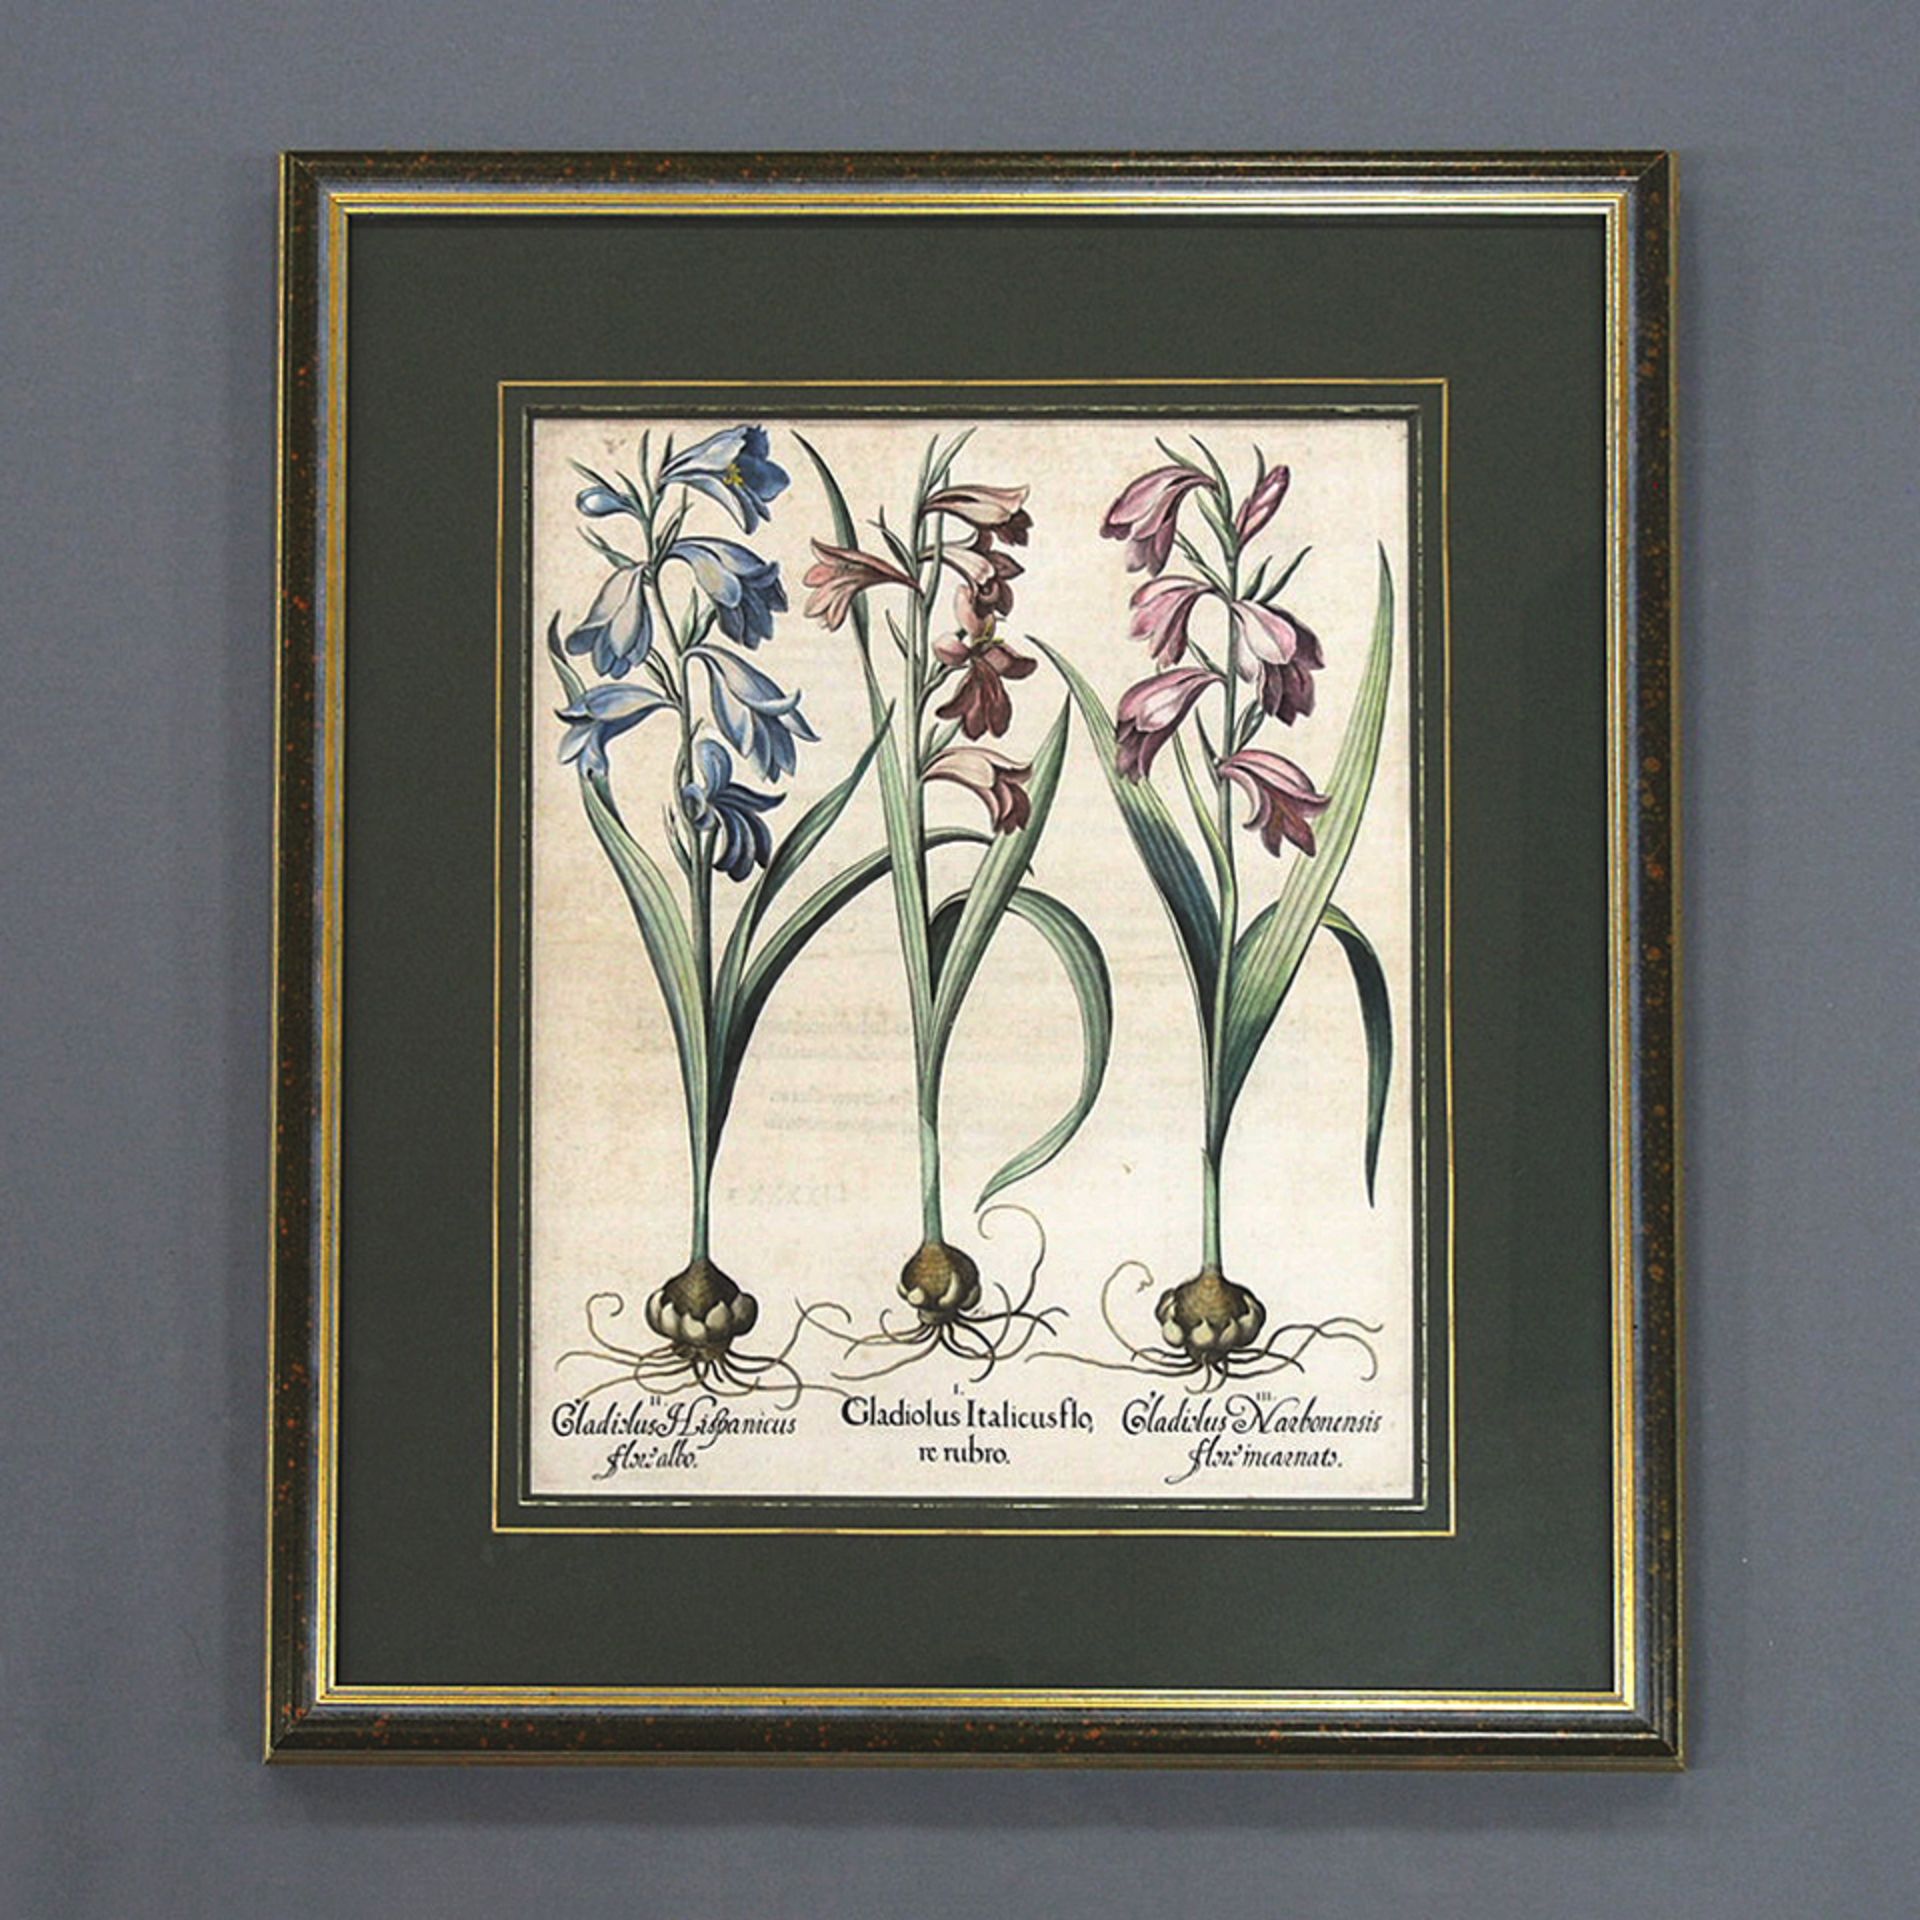 BESLER, Basilius: Gladiolus